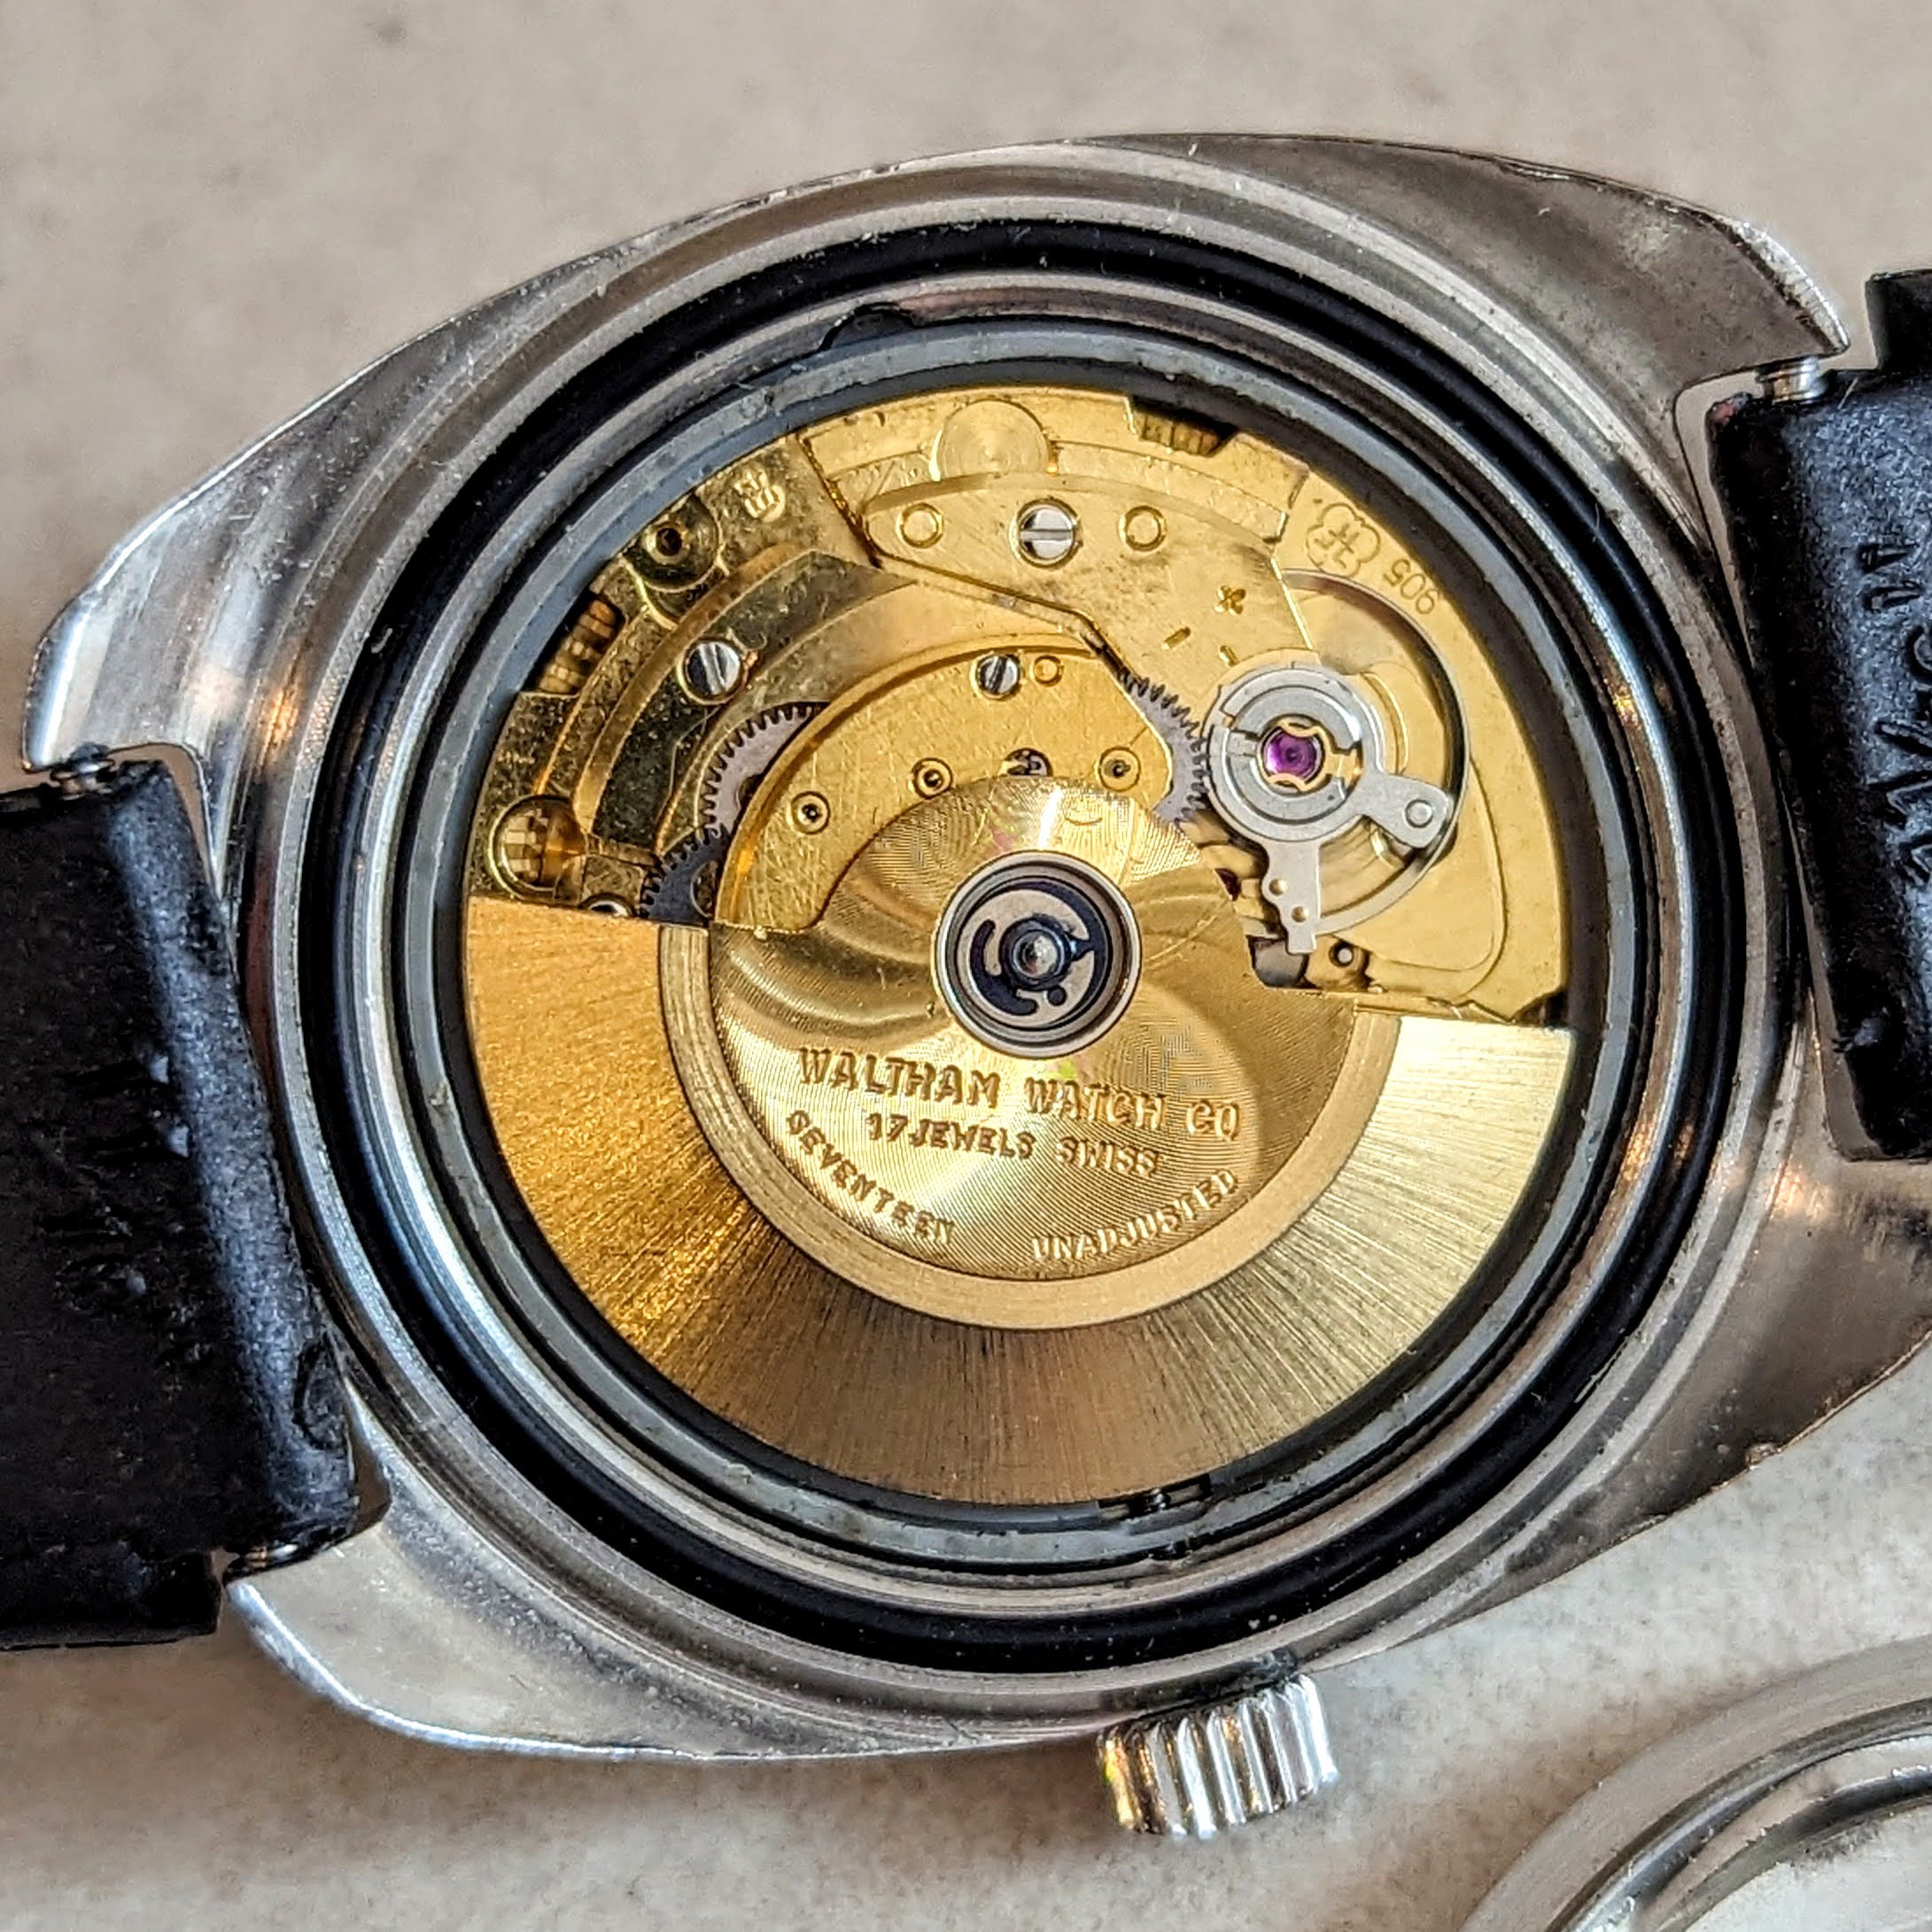 WALTHAM Self-Winding Skindiver Wristwatch Vintage Watch 17 Jewels Date Indicator